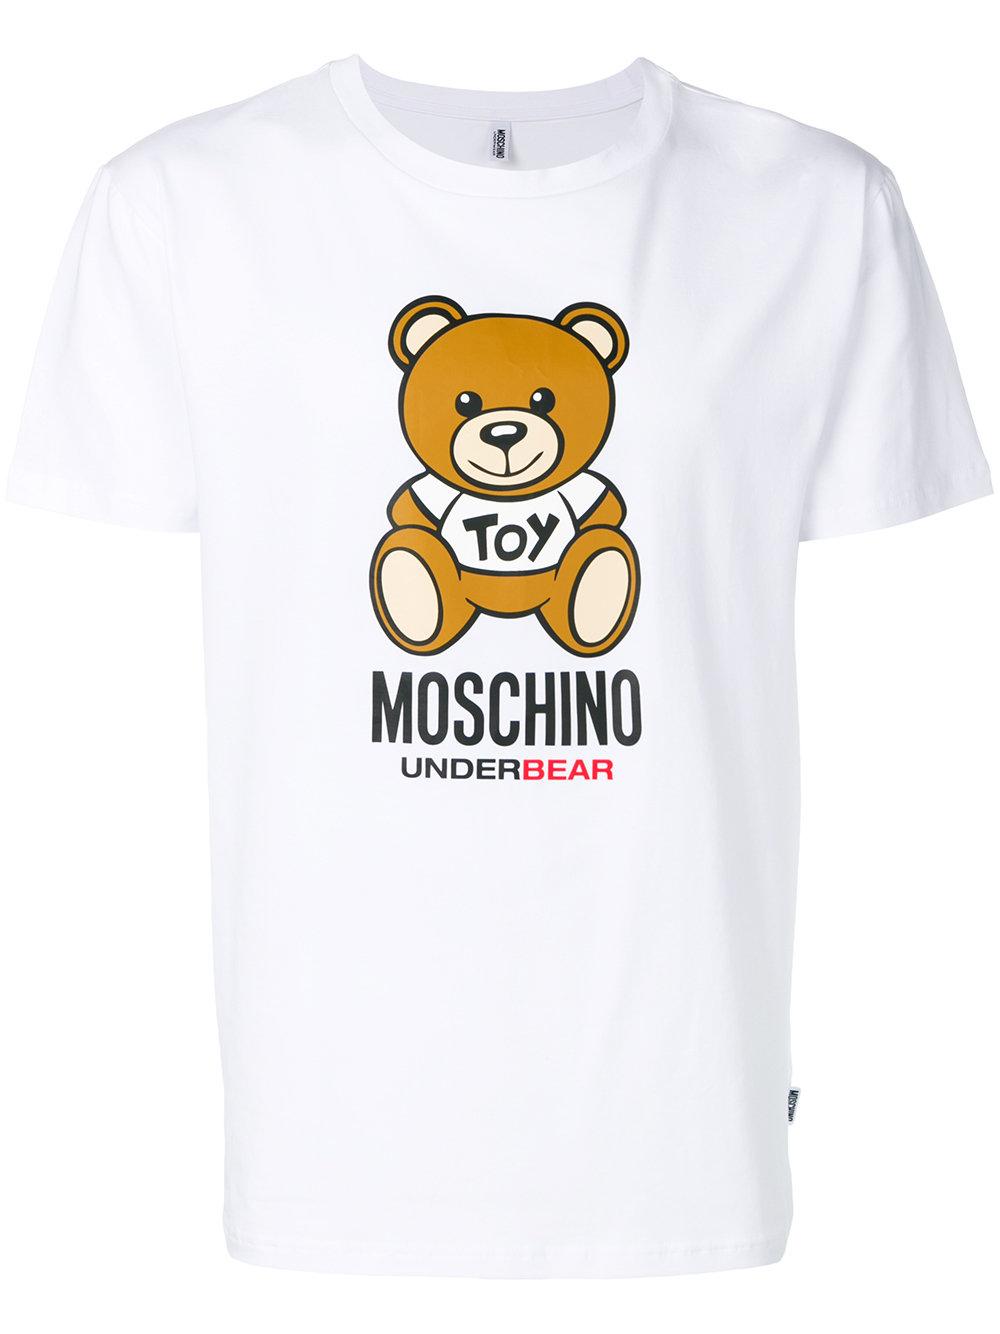 moschino underbear tshirt